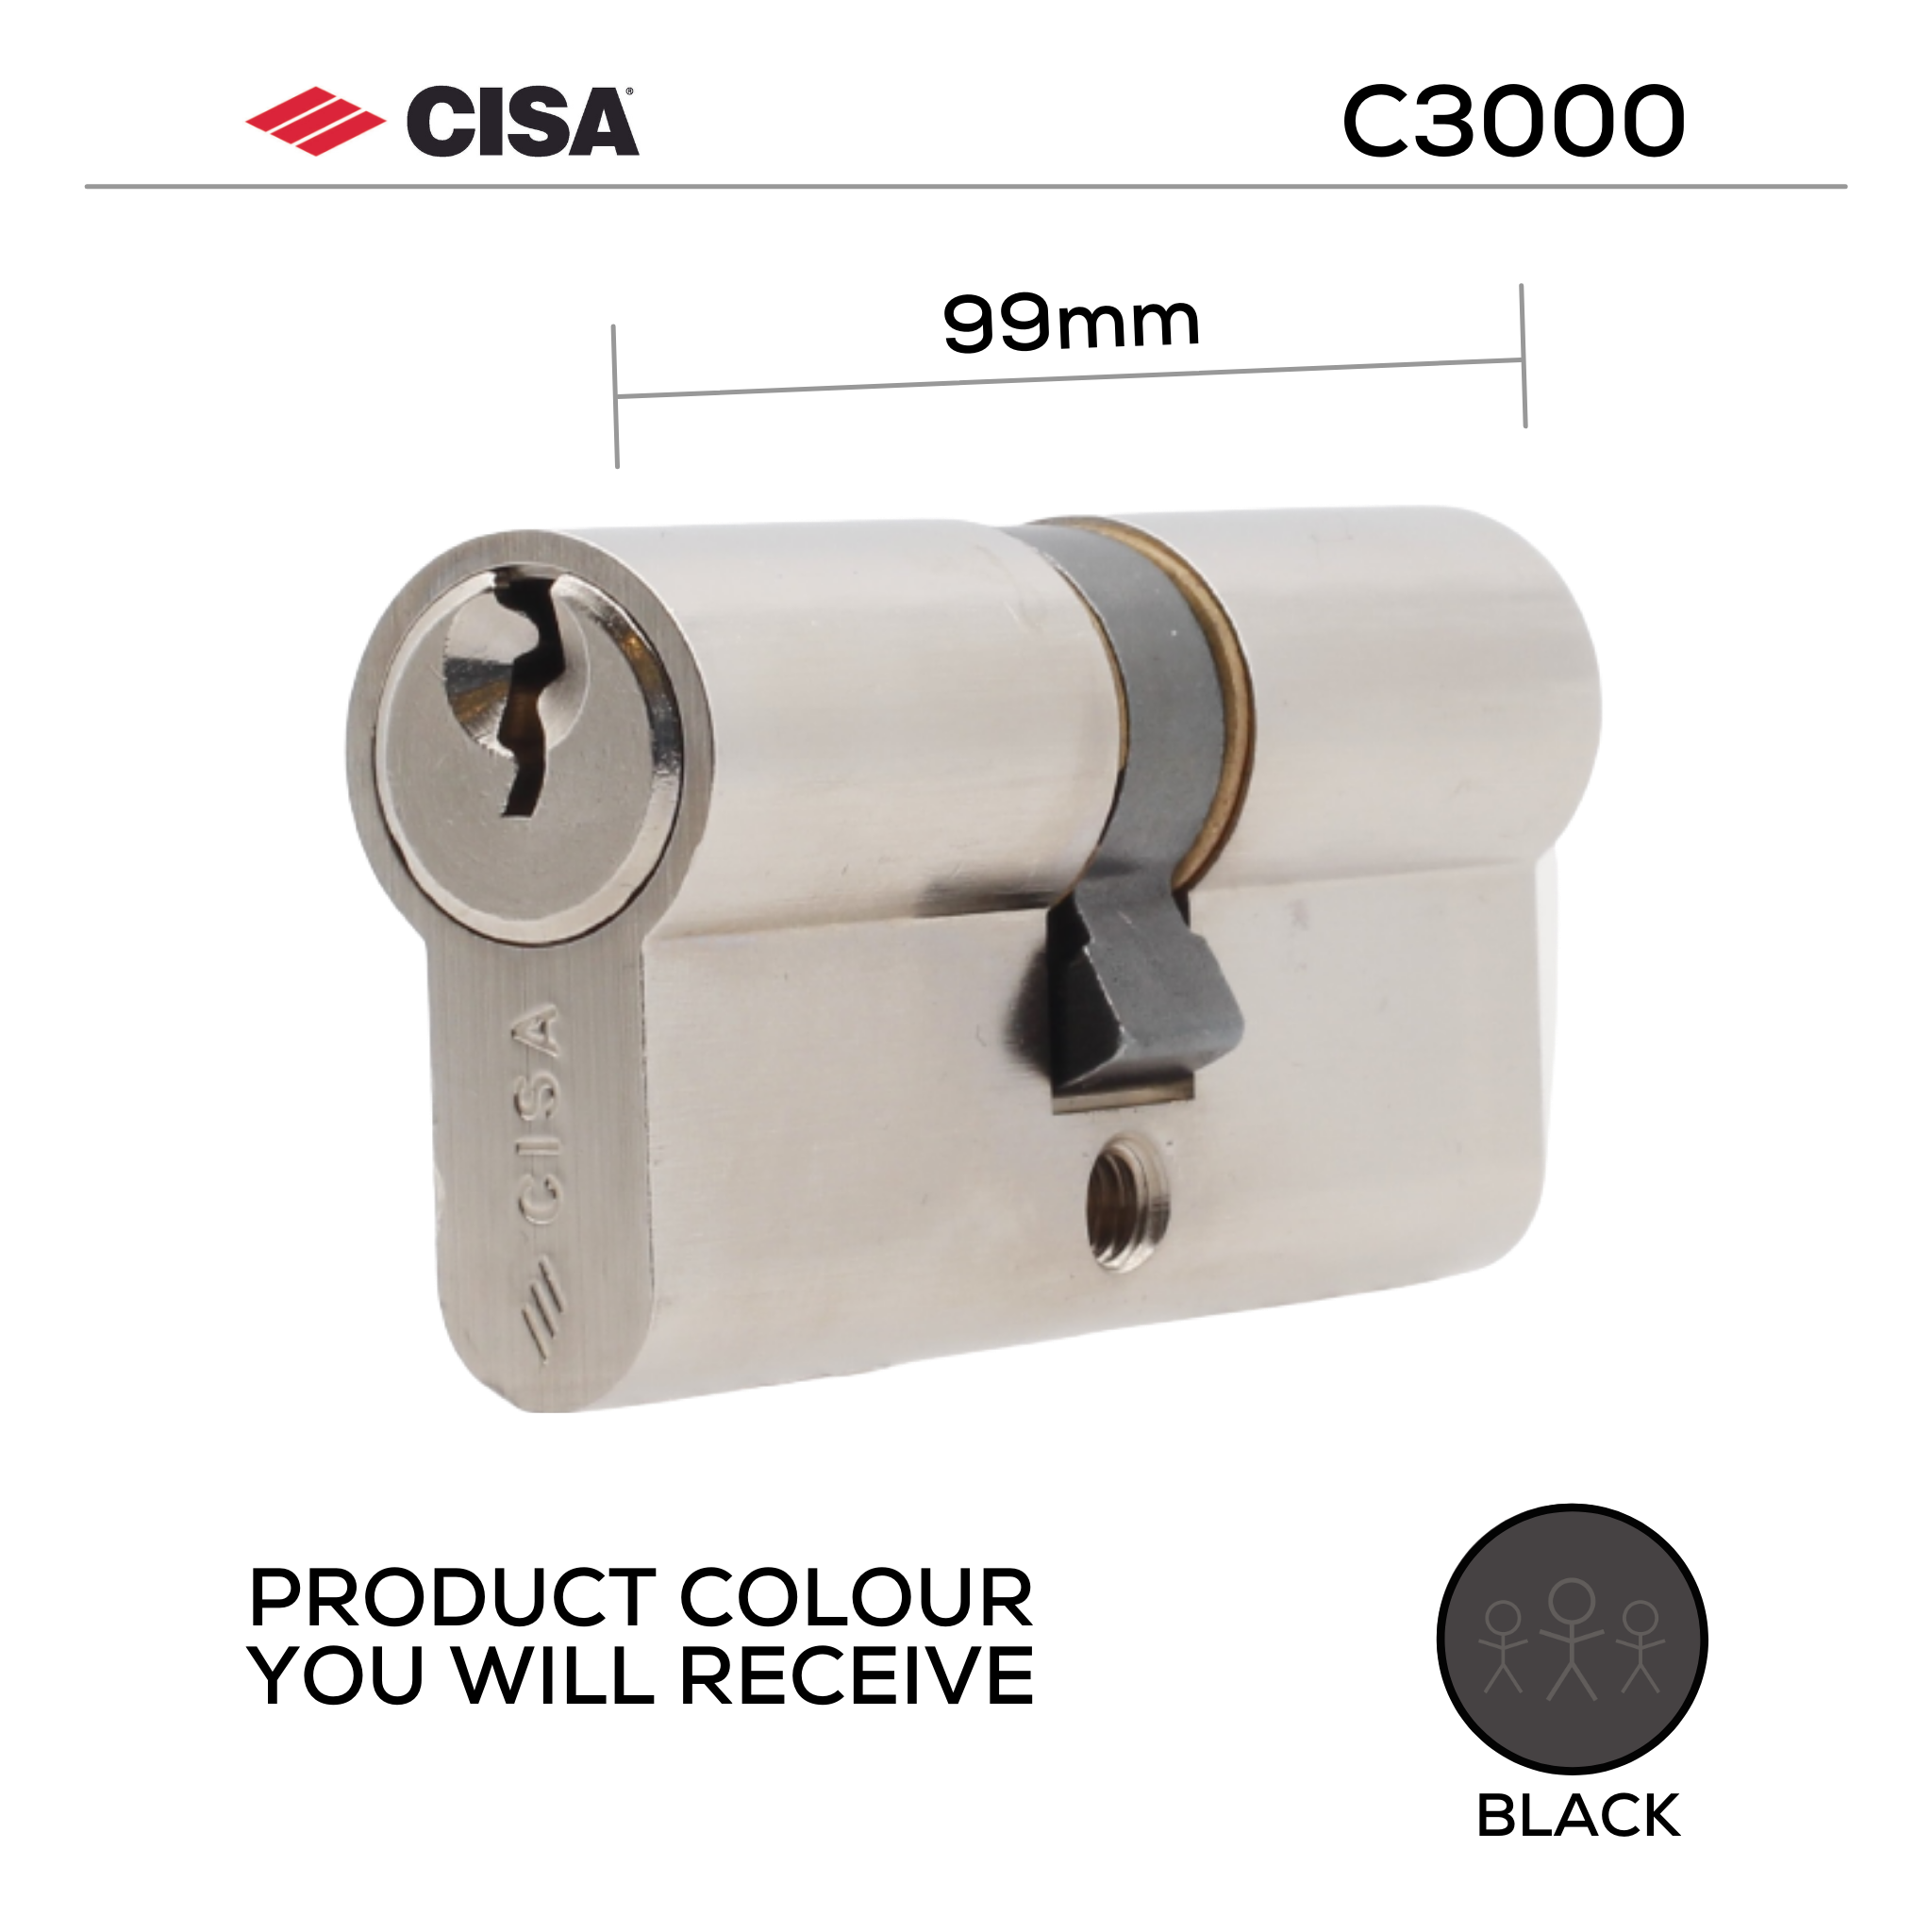 0N310-23-00-BLK-KD, 99mm - 49.5/49.5, Double Cylinder, C3000, Key to Key, Keyed to Differ (Standard), 3 Keys, 6 Pin, Black, CISA